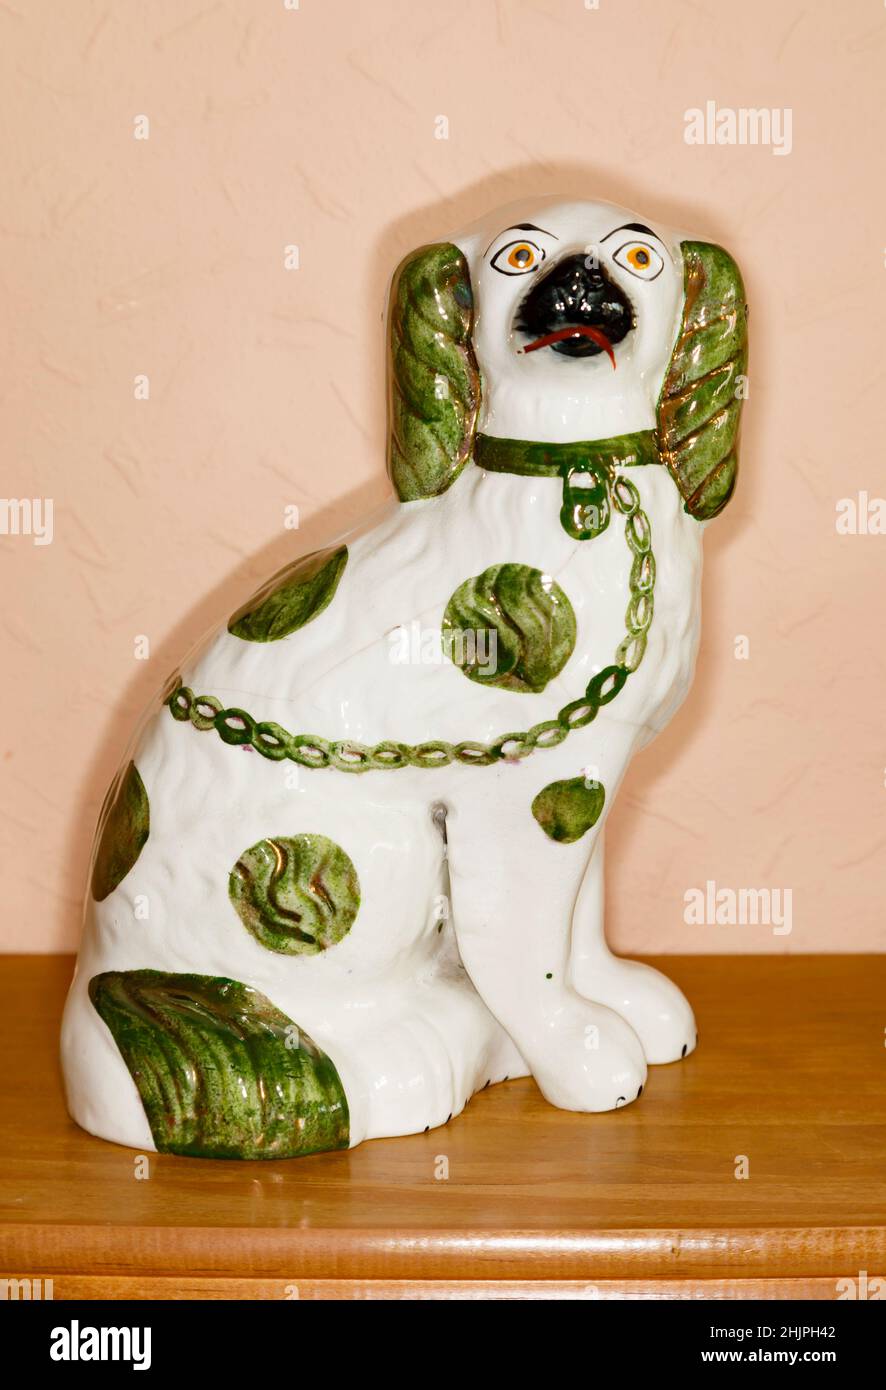 Antiker Keramik Staffordshire Topfhund mit grünen Glasur Highlights. Stockfoto